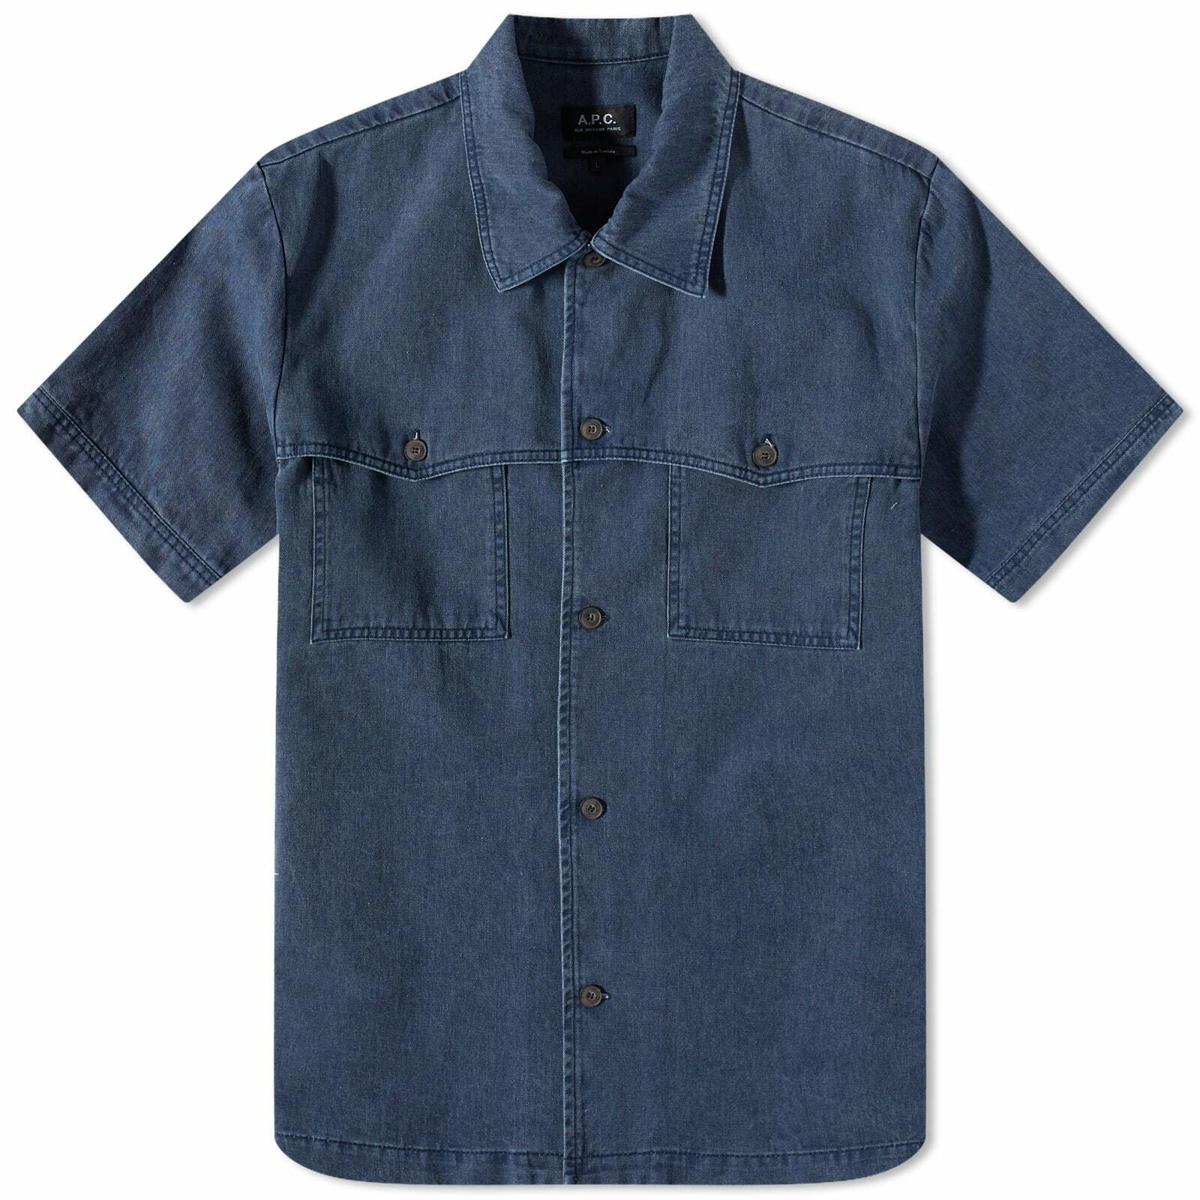 A.P.C. Men's Gilles Short Sleeve Washed Denim Shirt in Blue A.P.C.